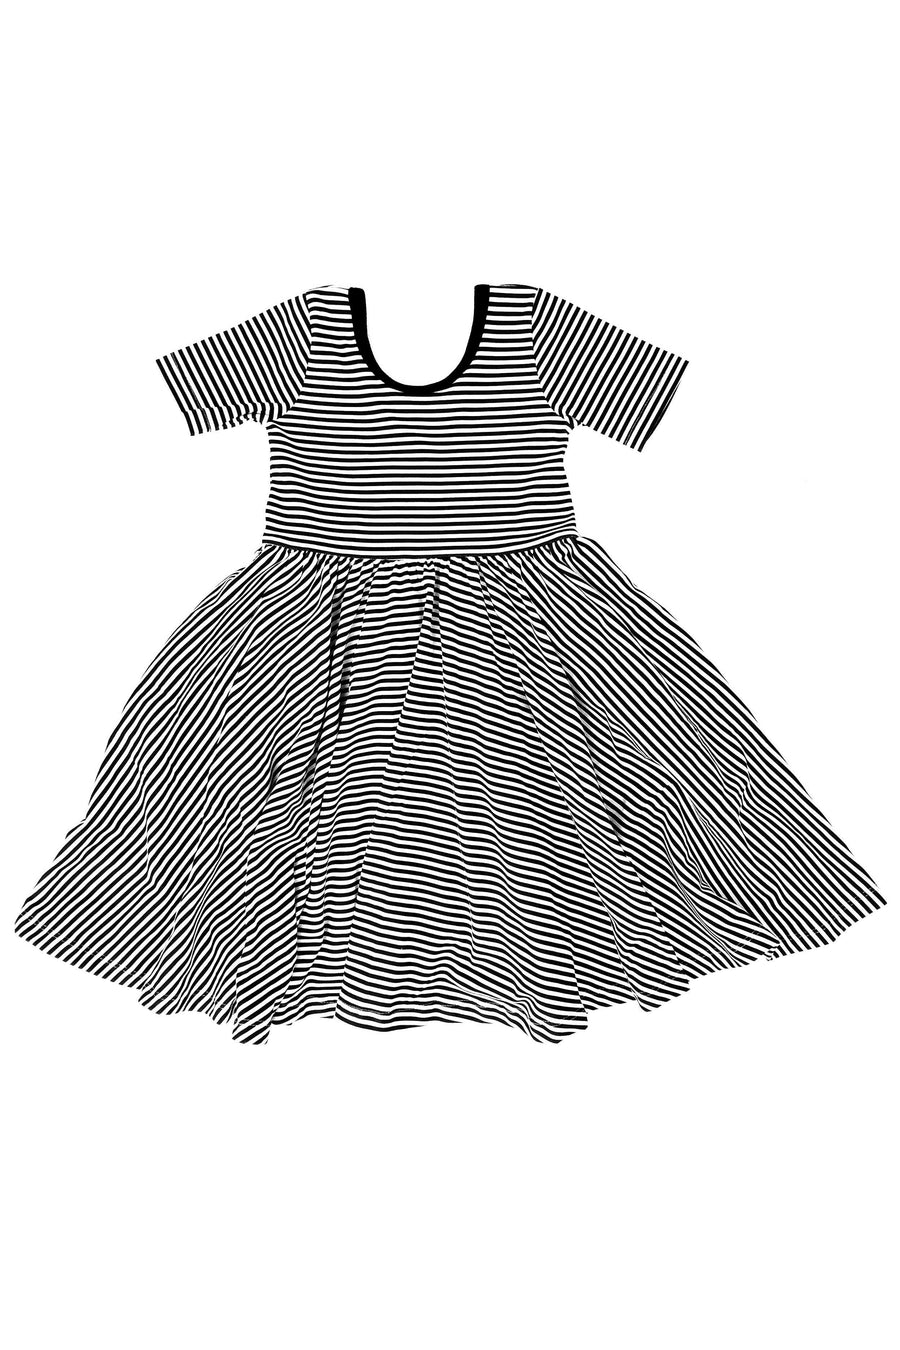 Organic Spinny Dress™ Stripes (3T-8Y) Same Day Shipping!